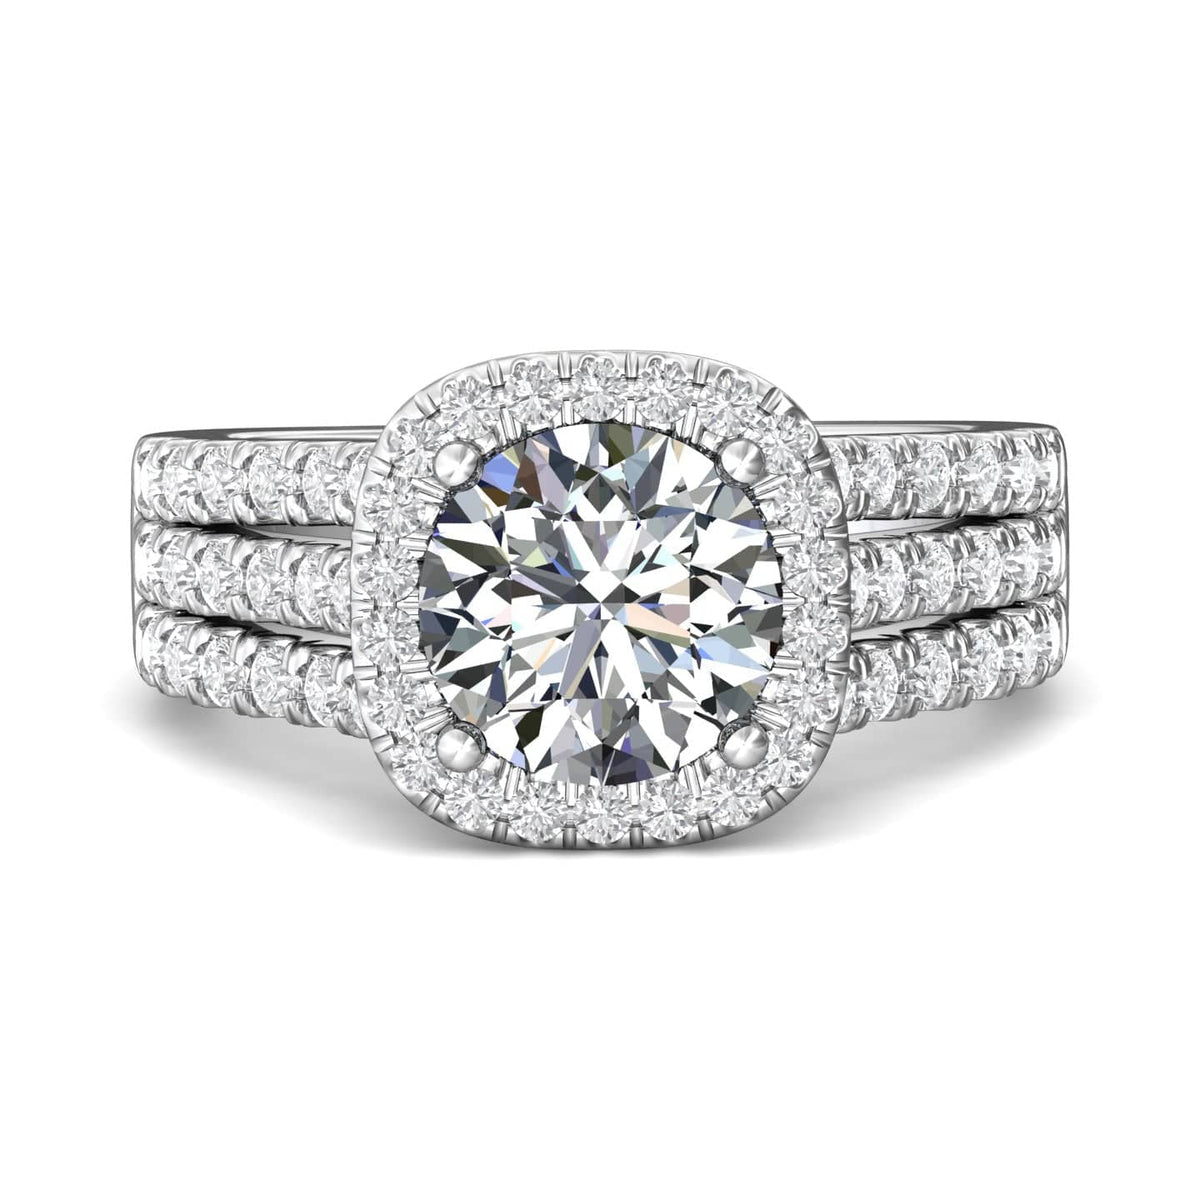 Platinum 3 Row Diamond Halo Engagement Ring Setting